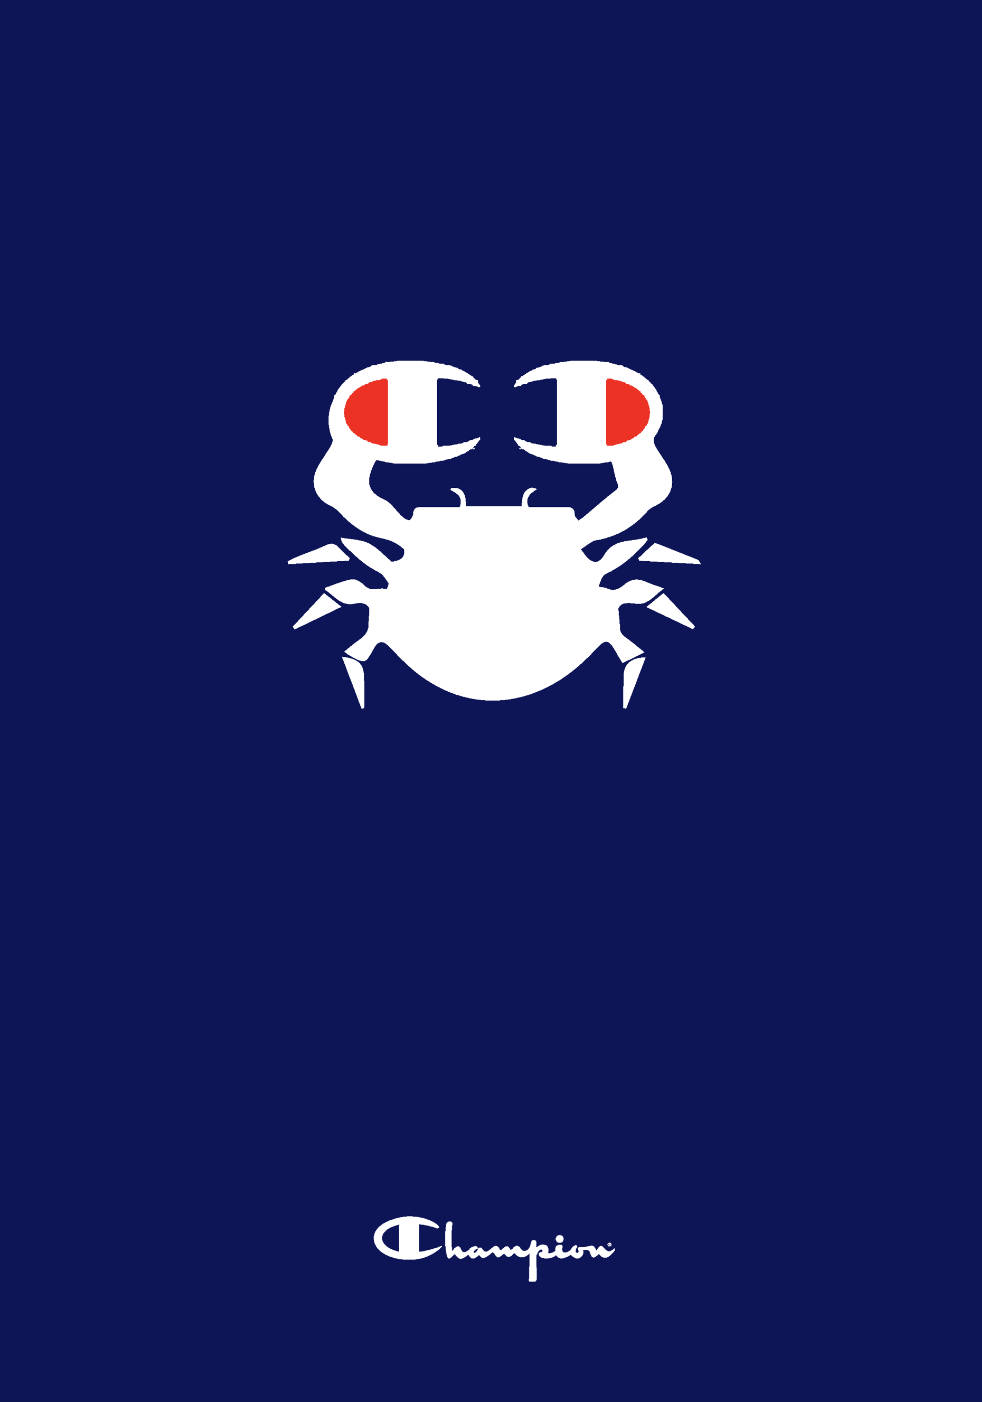 Crab Champion Logo Wallpaper